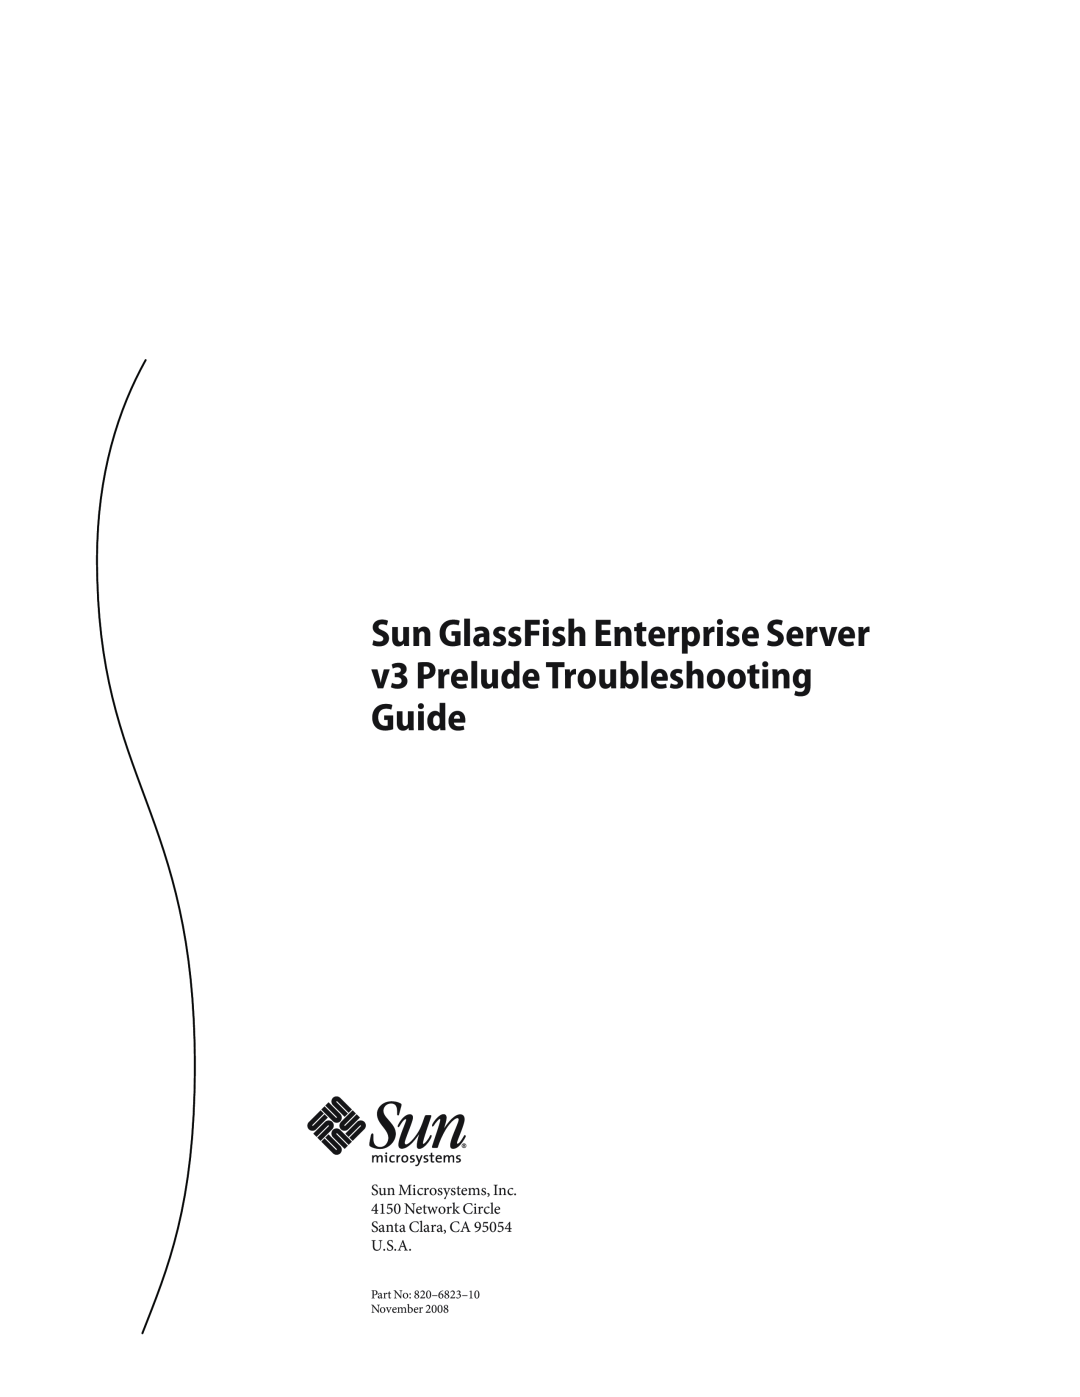 Sun Microsystems 820682310 manual v3 Prelude Troubleshooting Guide, Sun GlassFish Enterprise Server 